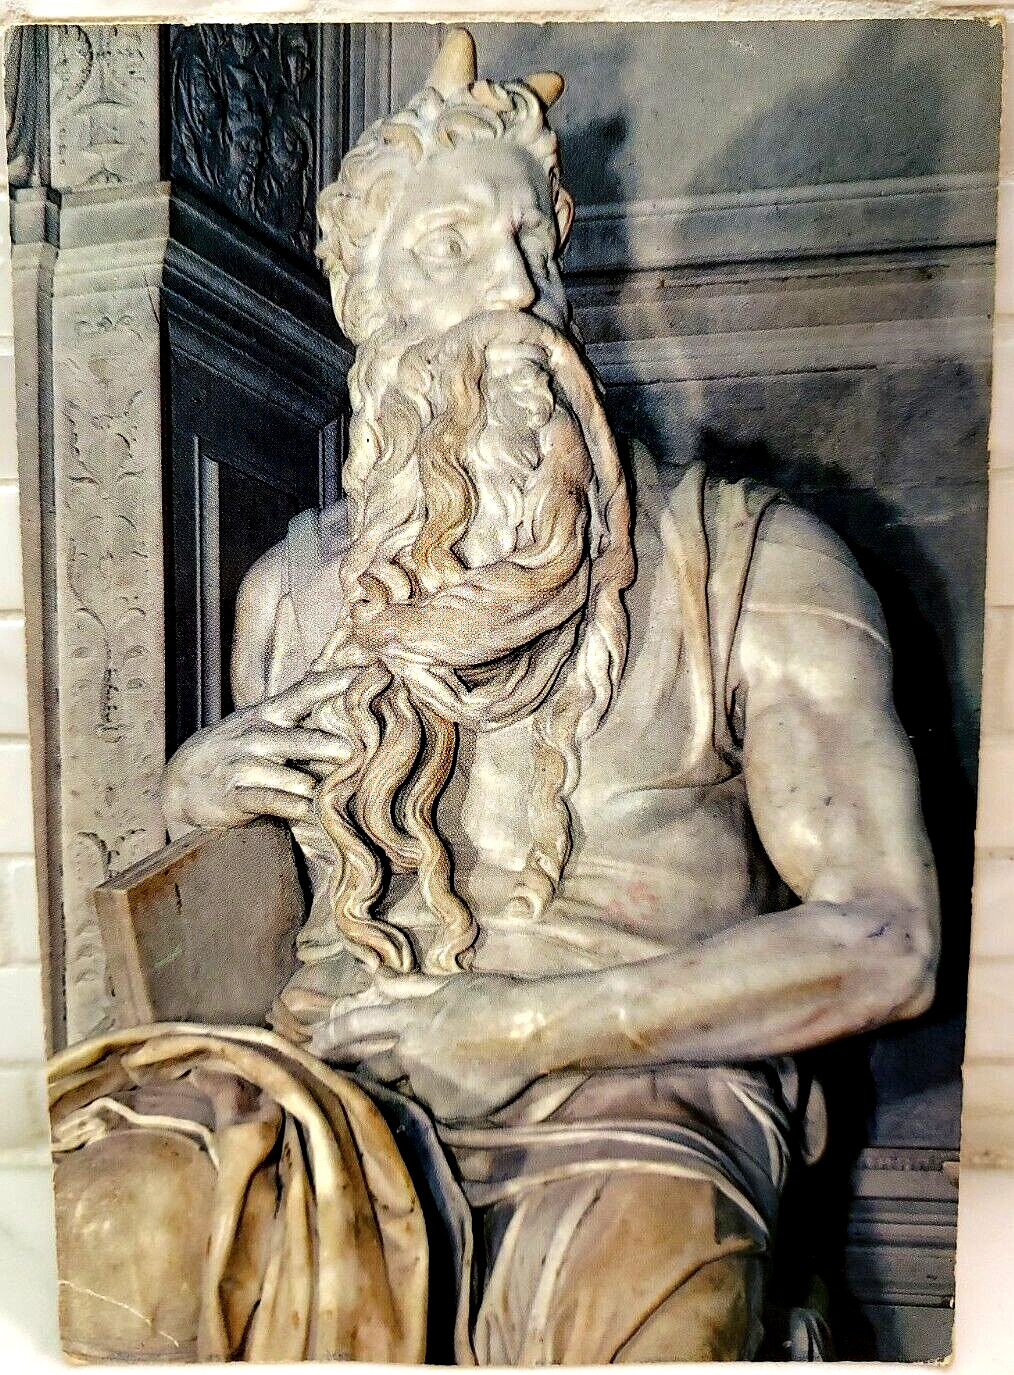 “Moses” by Michelangelo Buonarroti, Church of San Pietro in Vincoli, Rome, Italy